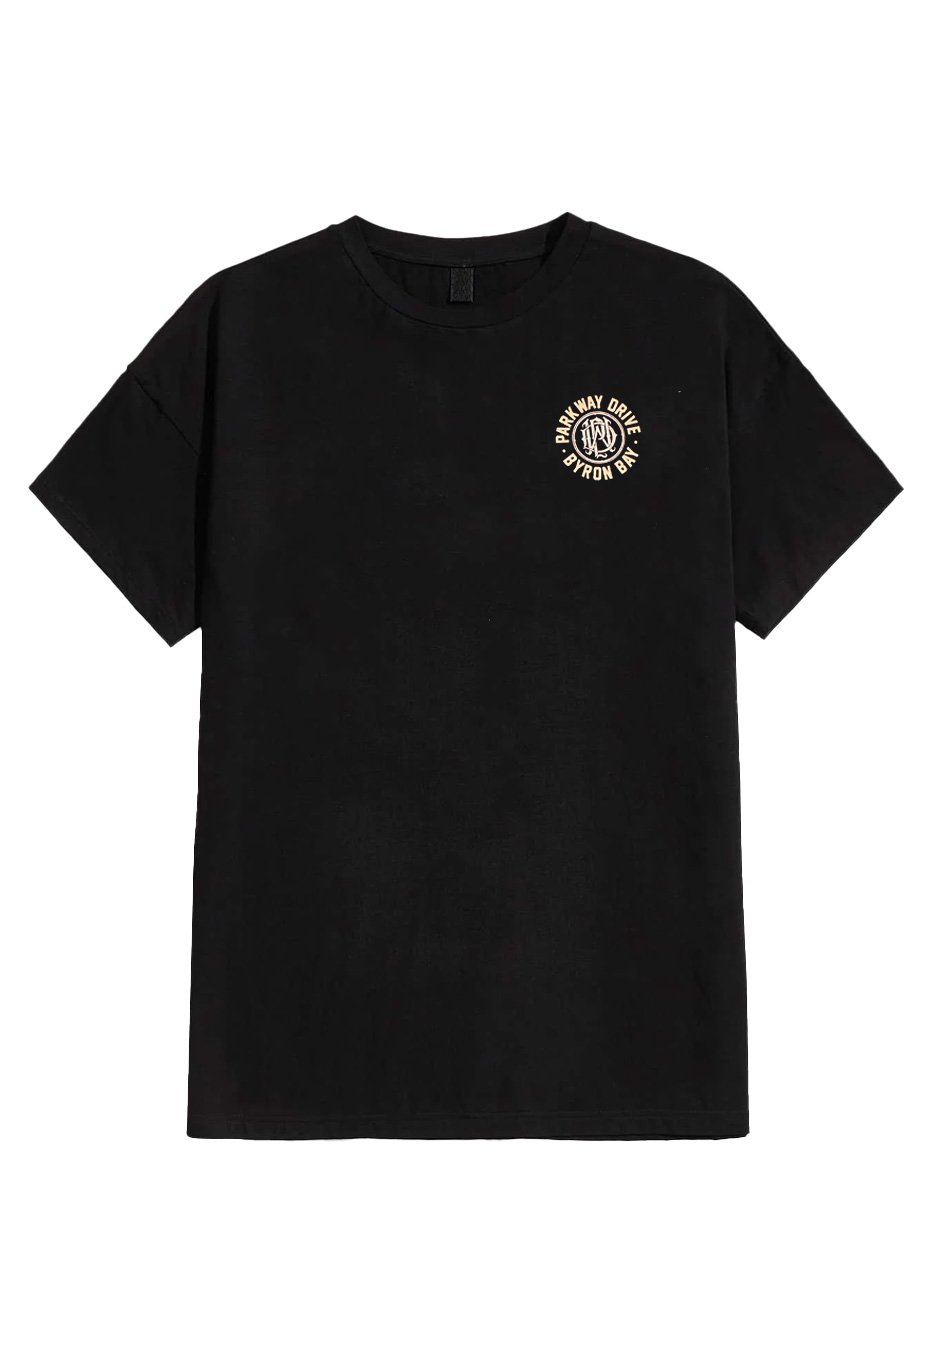 Parkway Drive - Devil Tricks - T-Shirt